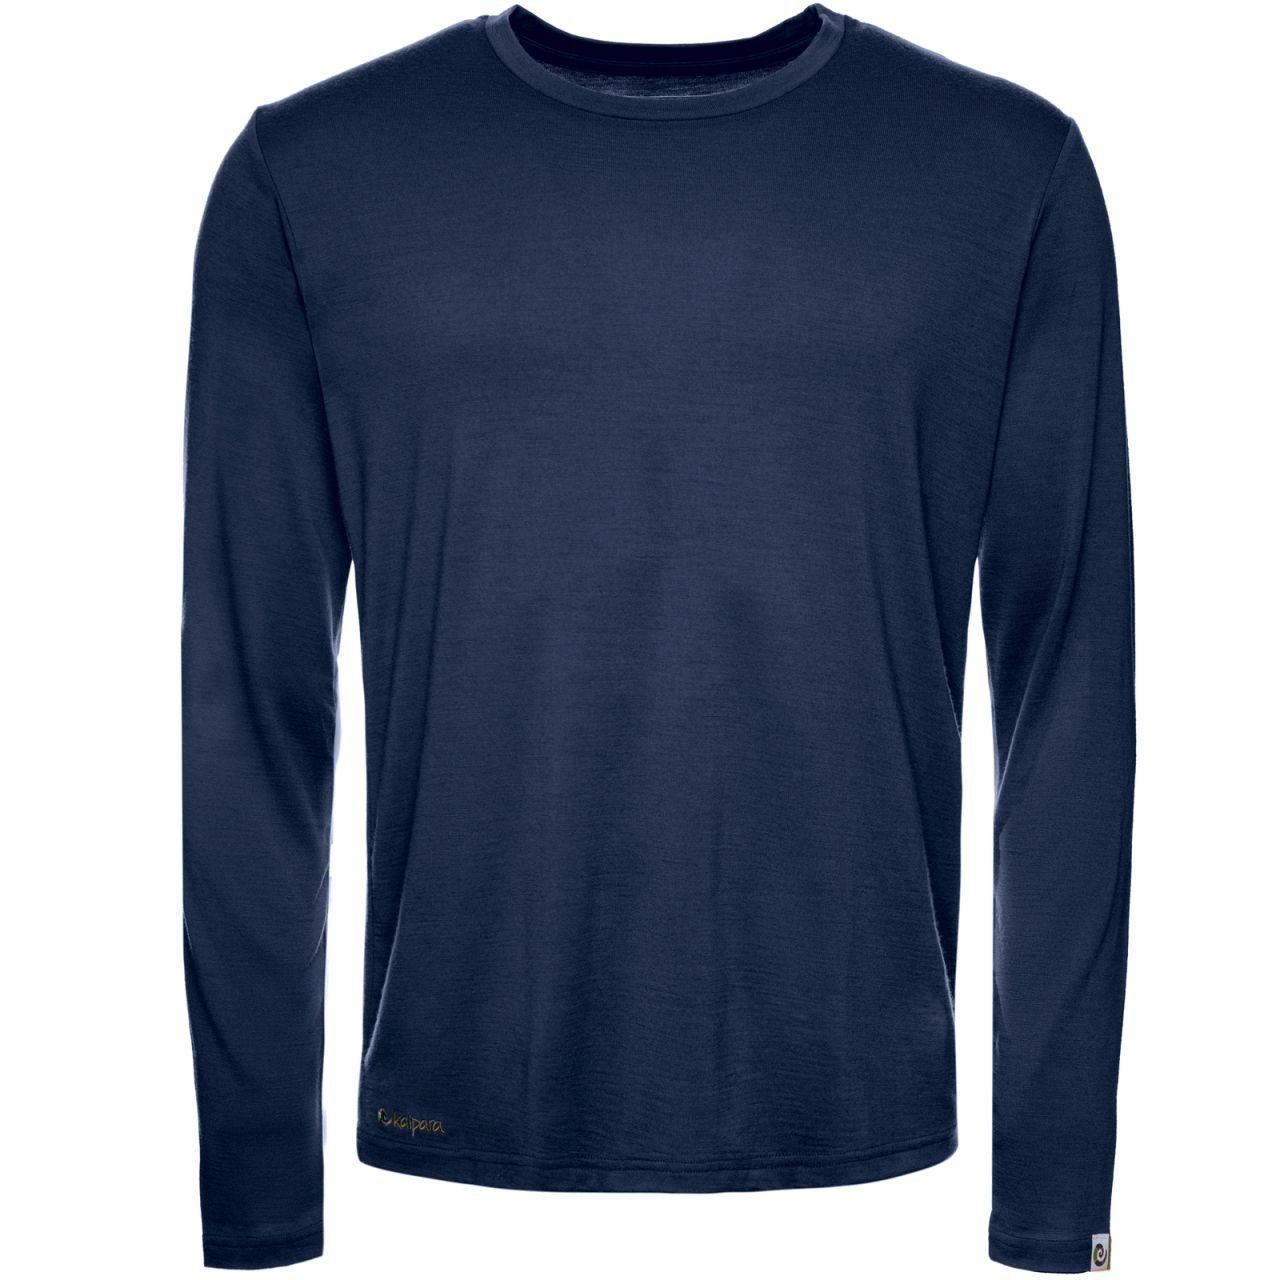 Kaipara - Merino 200g aus Germany warm Herren-Unterhemd reiner (1-St) Blau Merinowolle Sportswear Unterhemd in Regularfit Merino Made